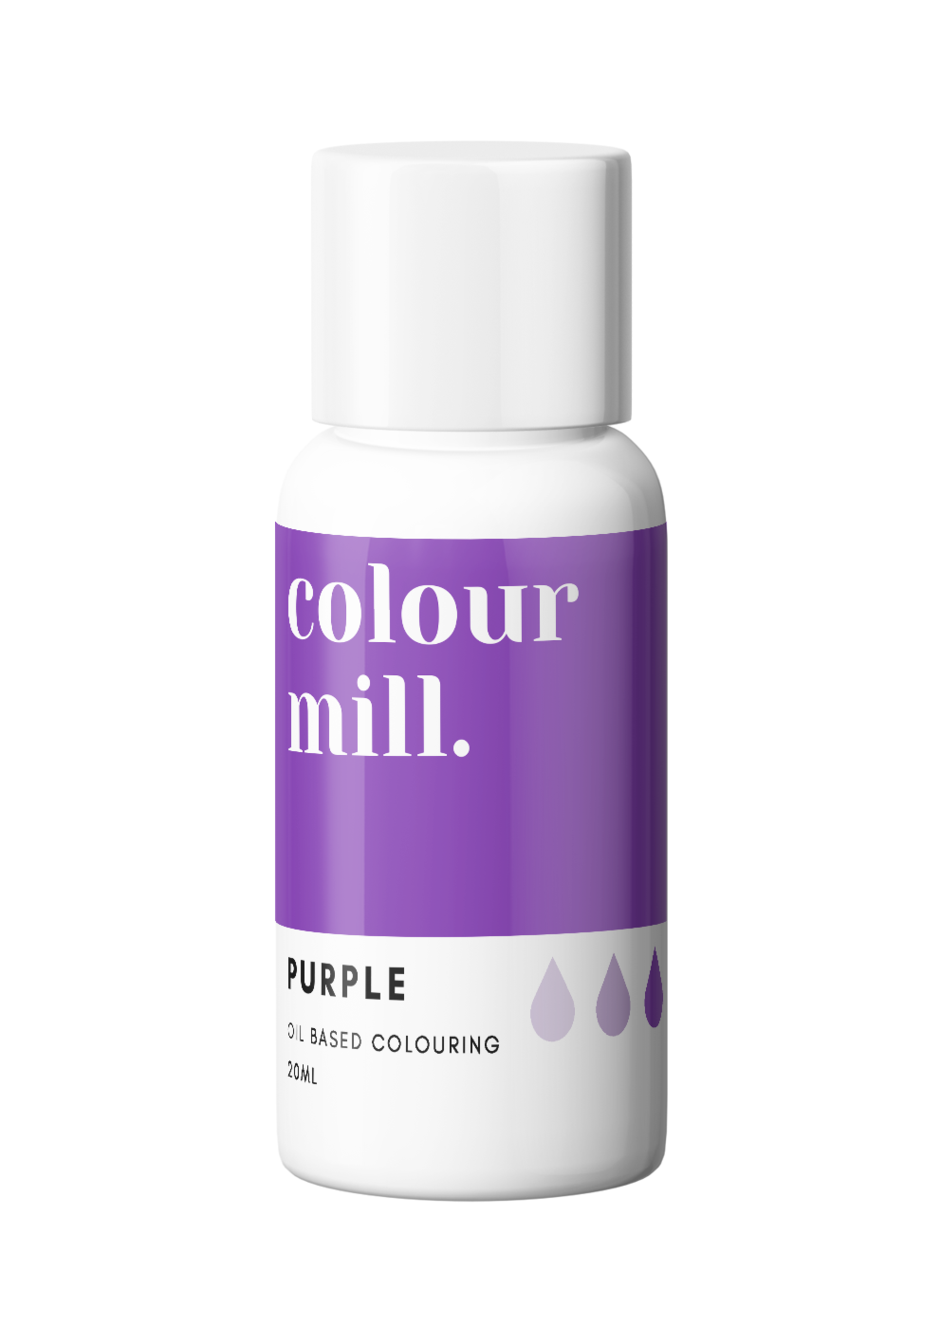 Purple, 20ml, Colour Mill Oil Based Colouring